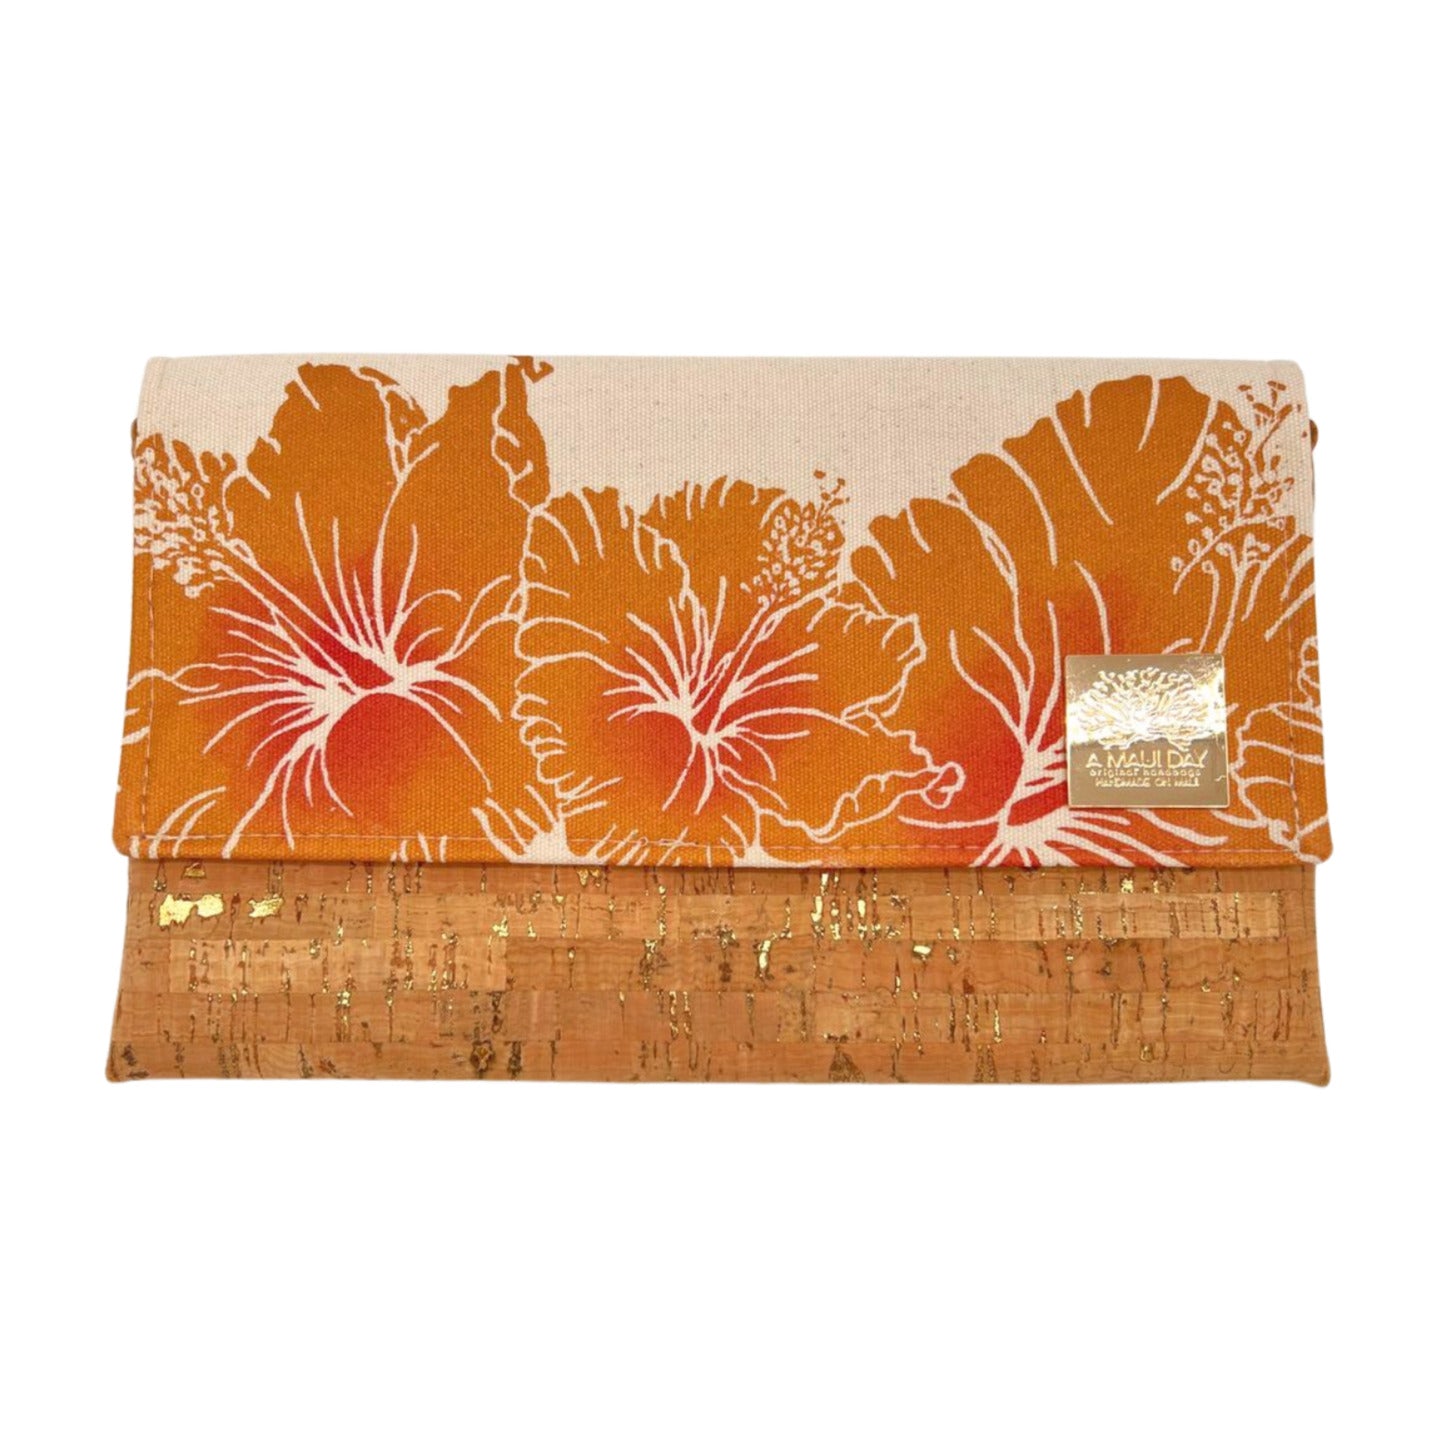 Pop-Up Mākeke - A Maui Day Original Handbags - Handprinted Fold-Over Handbag - Hibiscus on Canvas - Front View